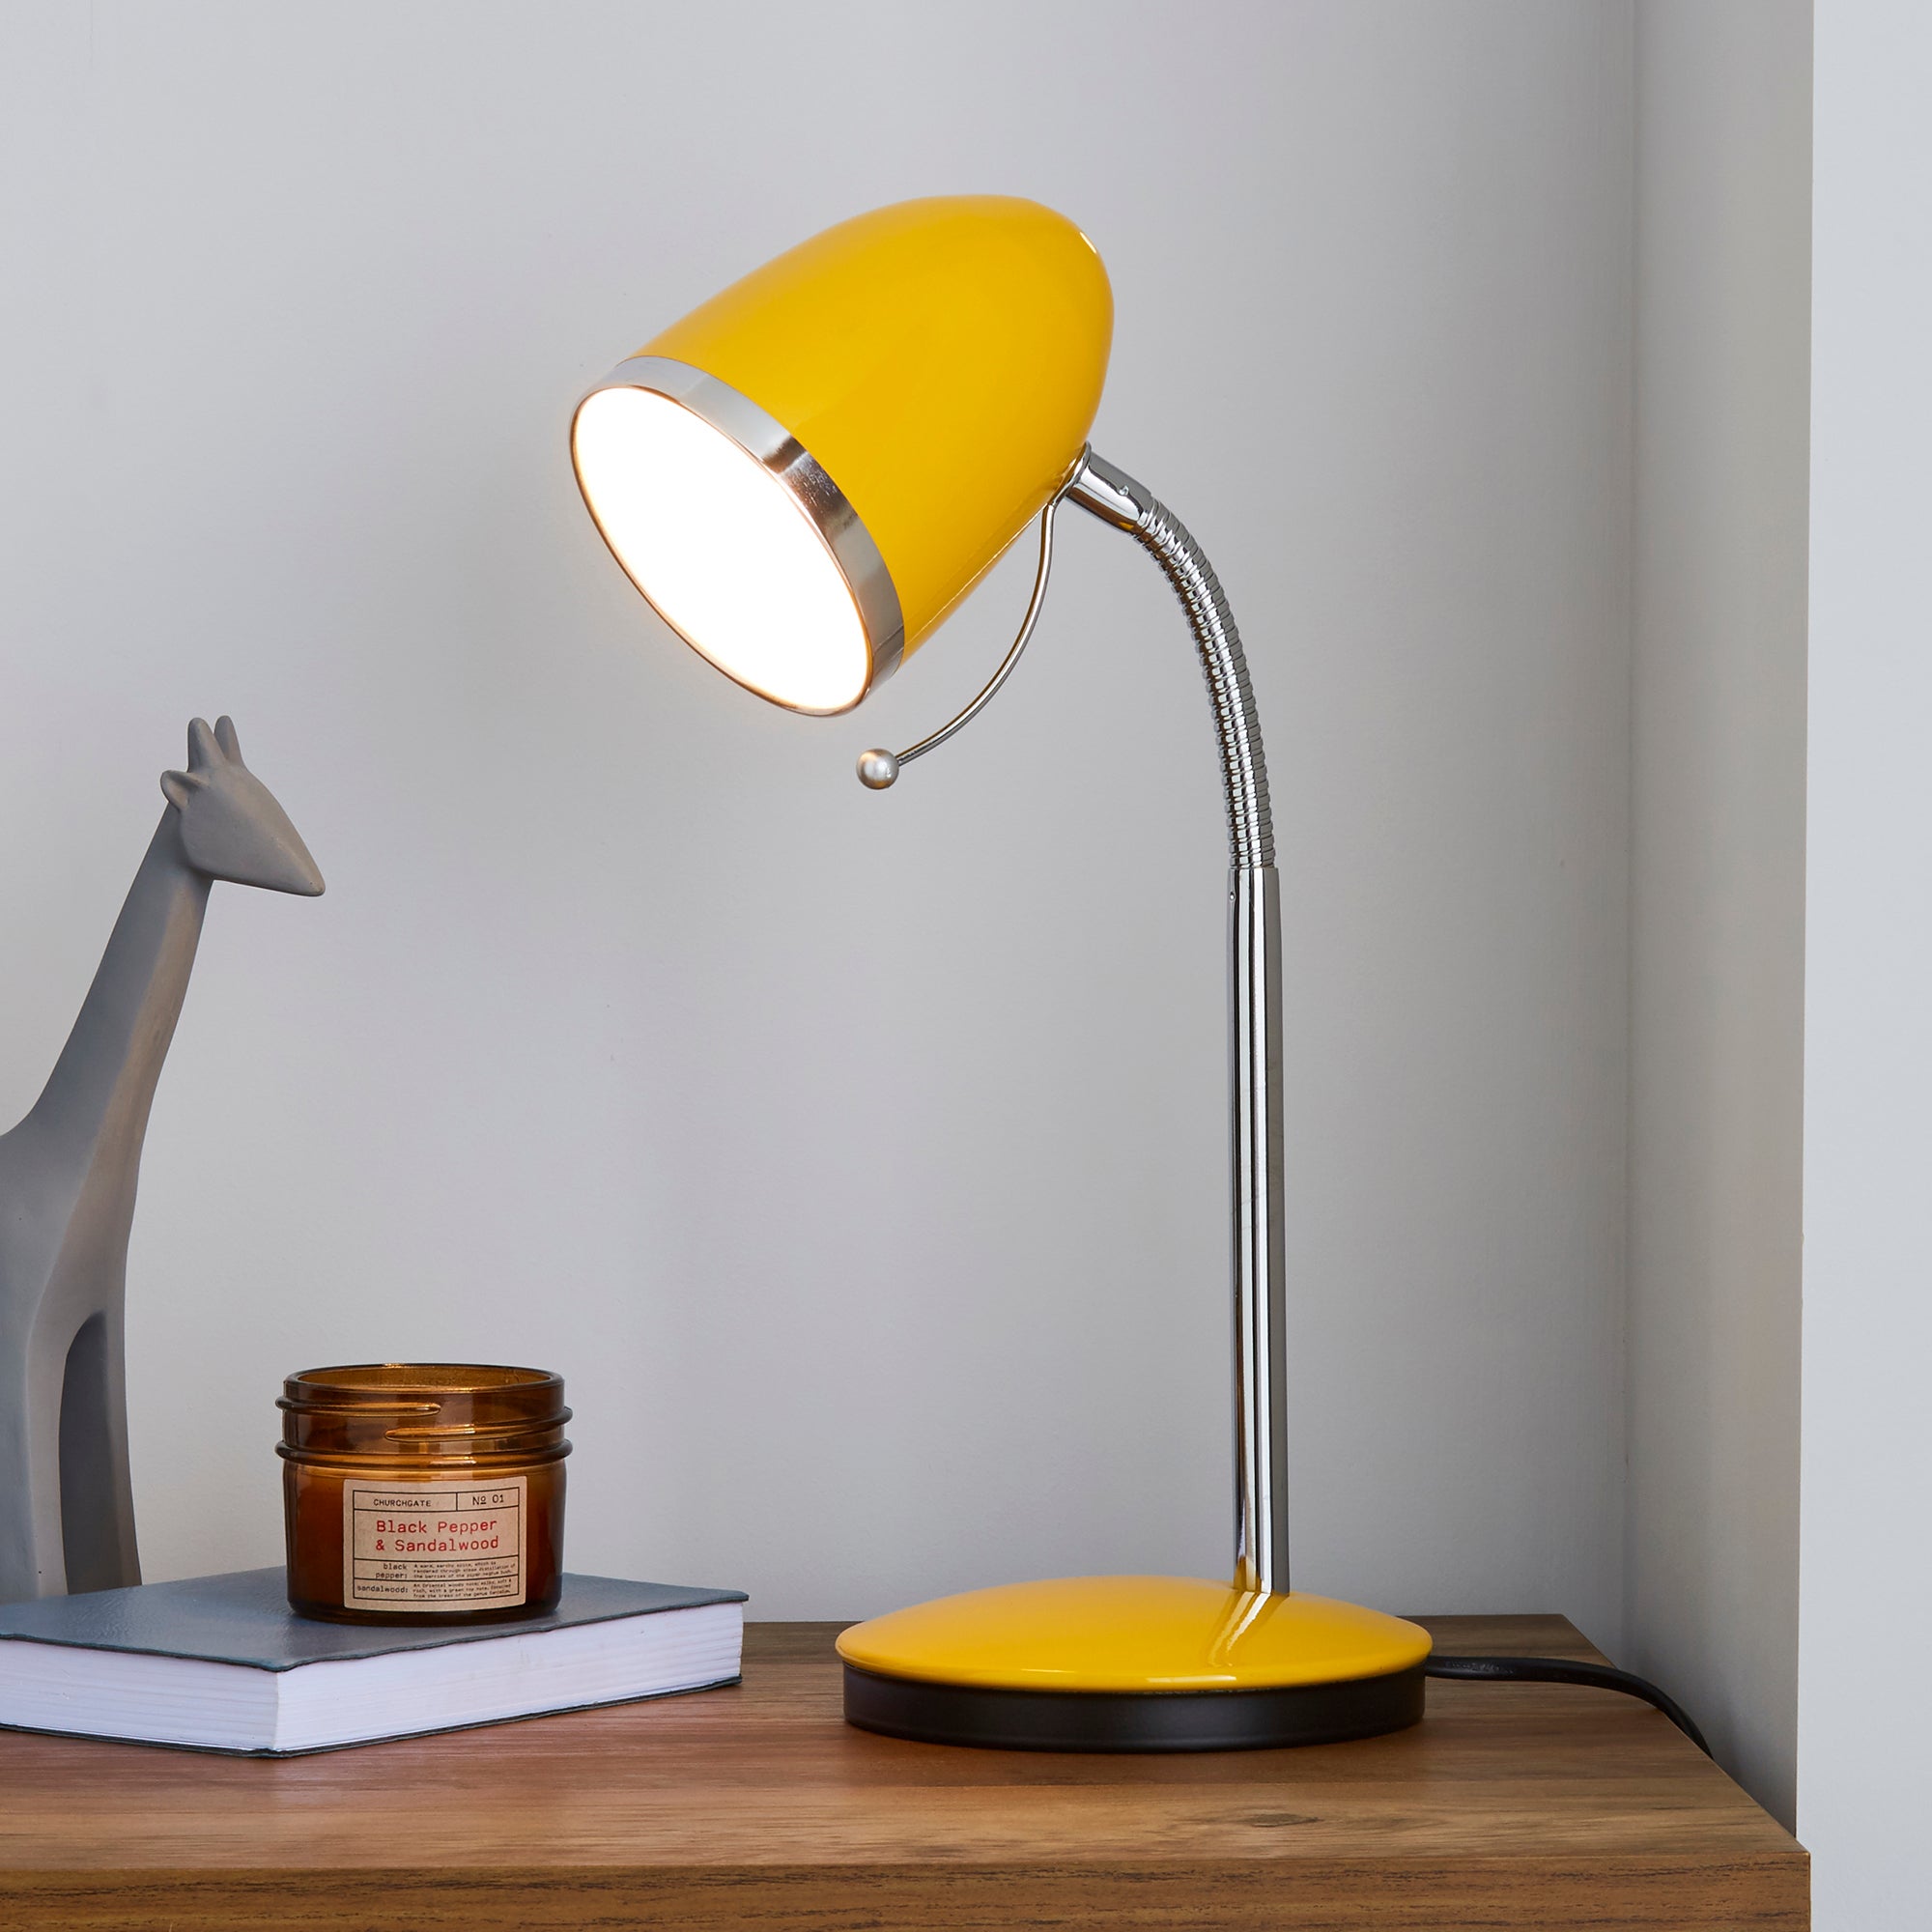 Photo of Tate ochre and chrome desk lamp yellow